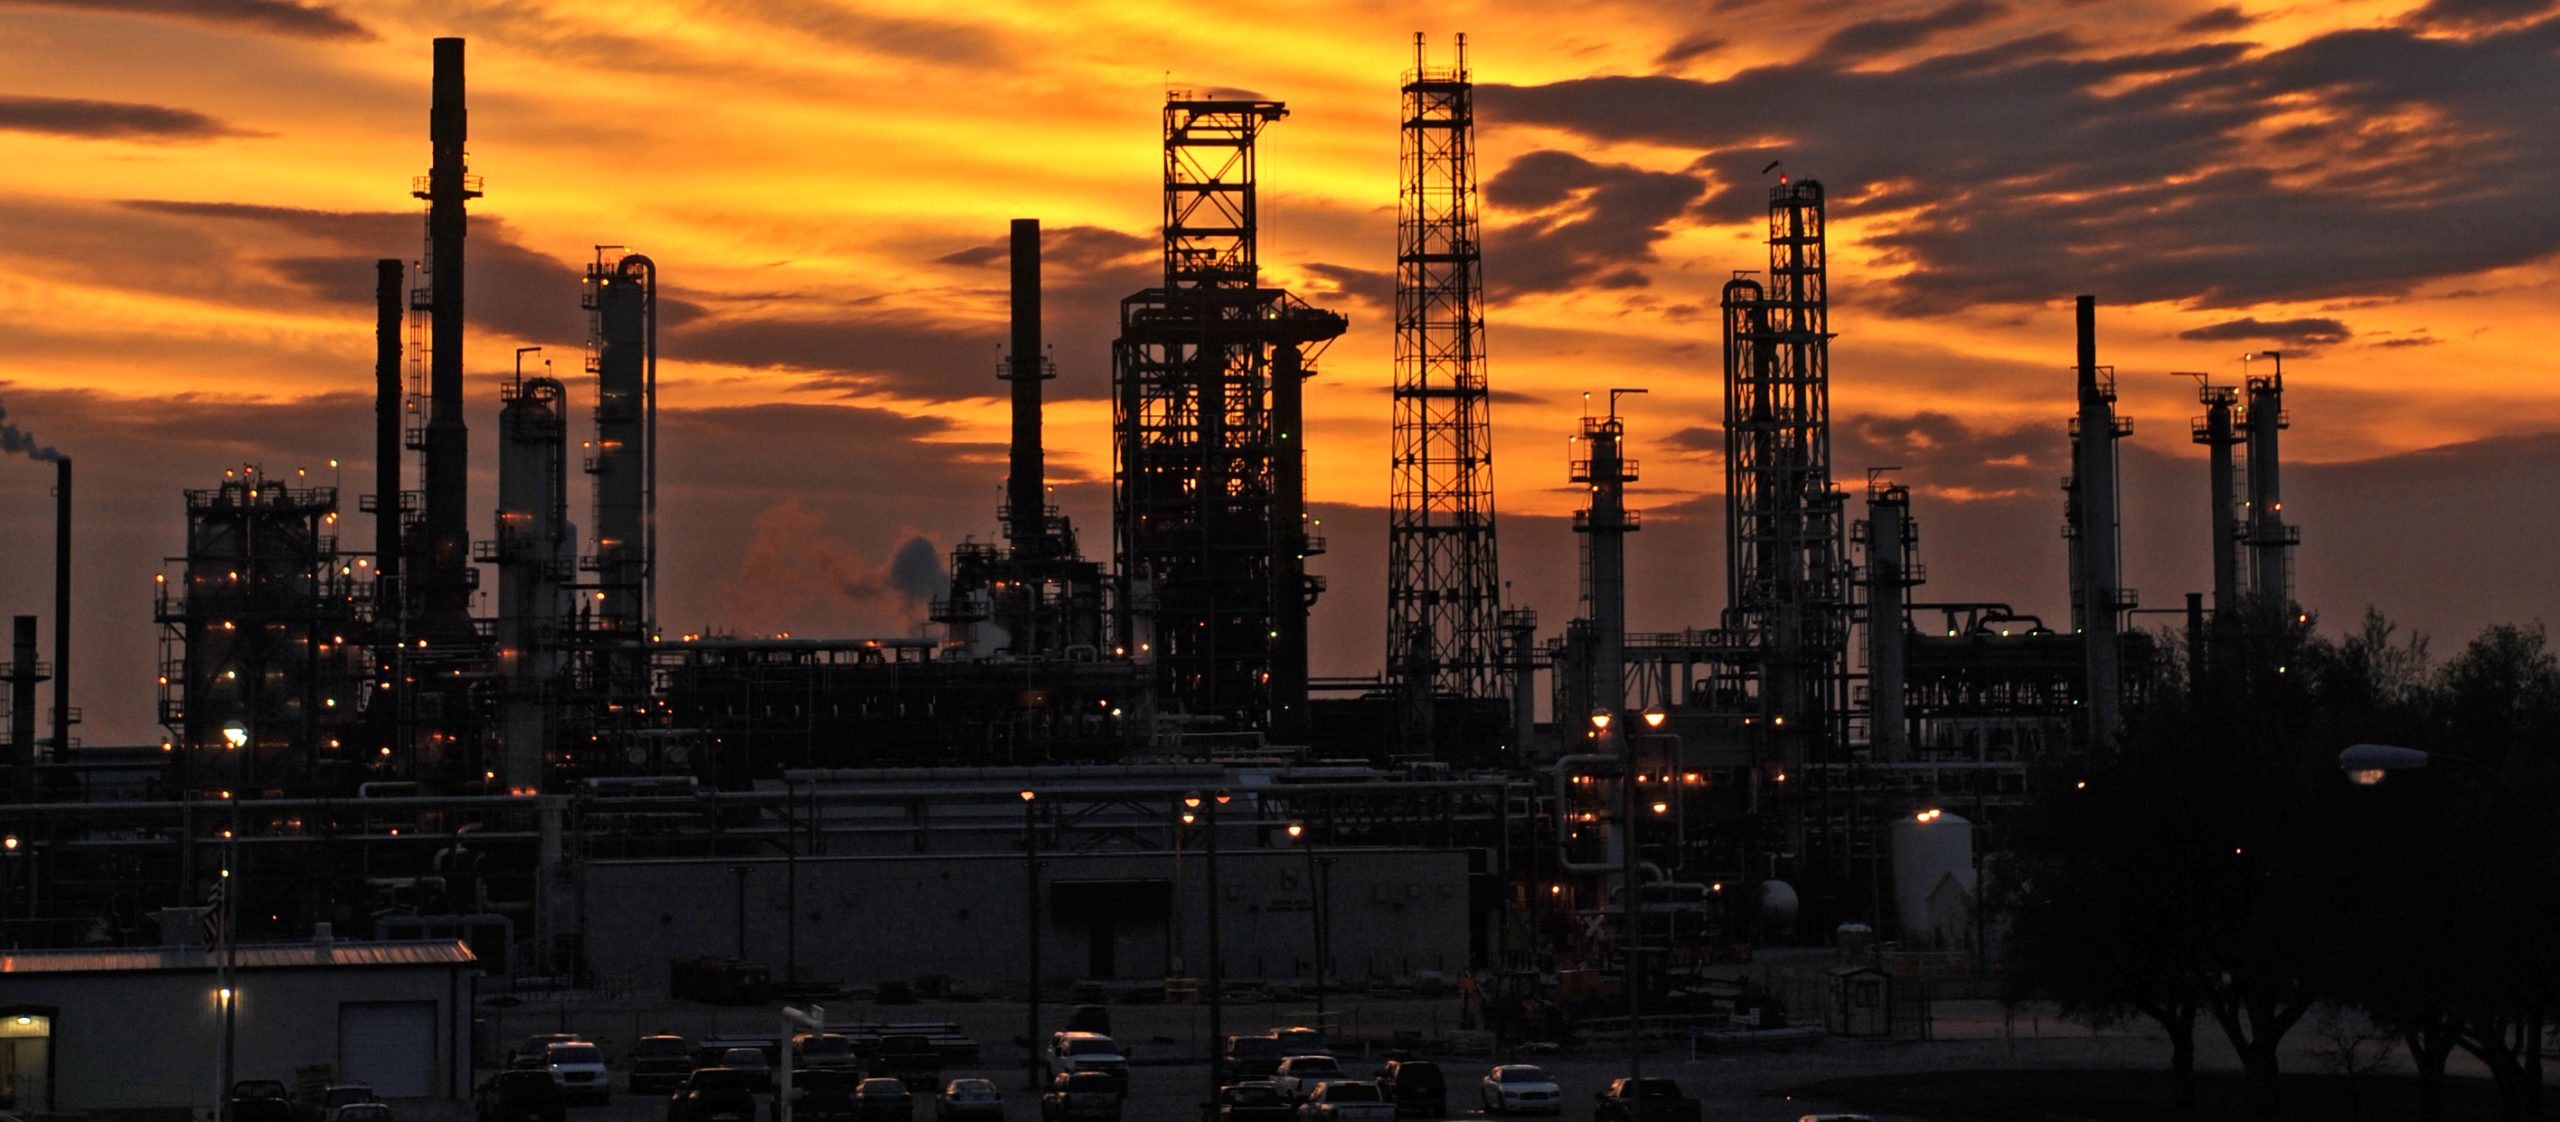 CHS Refinery in McPherson, Kansas at dusk